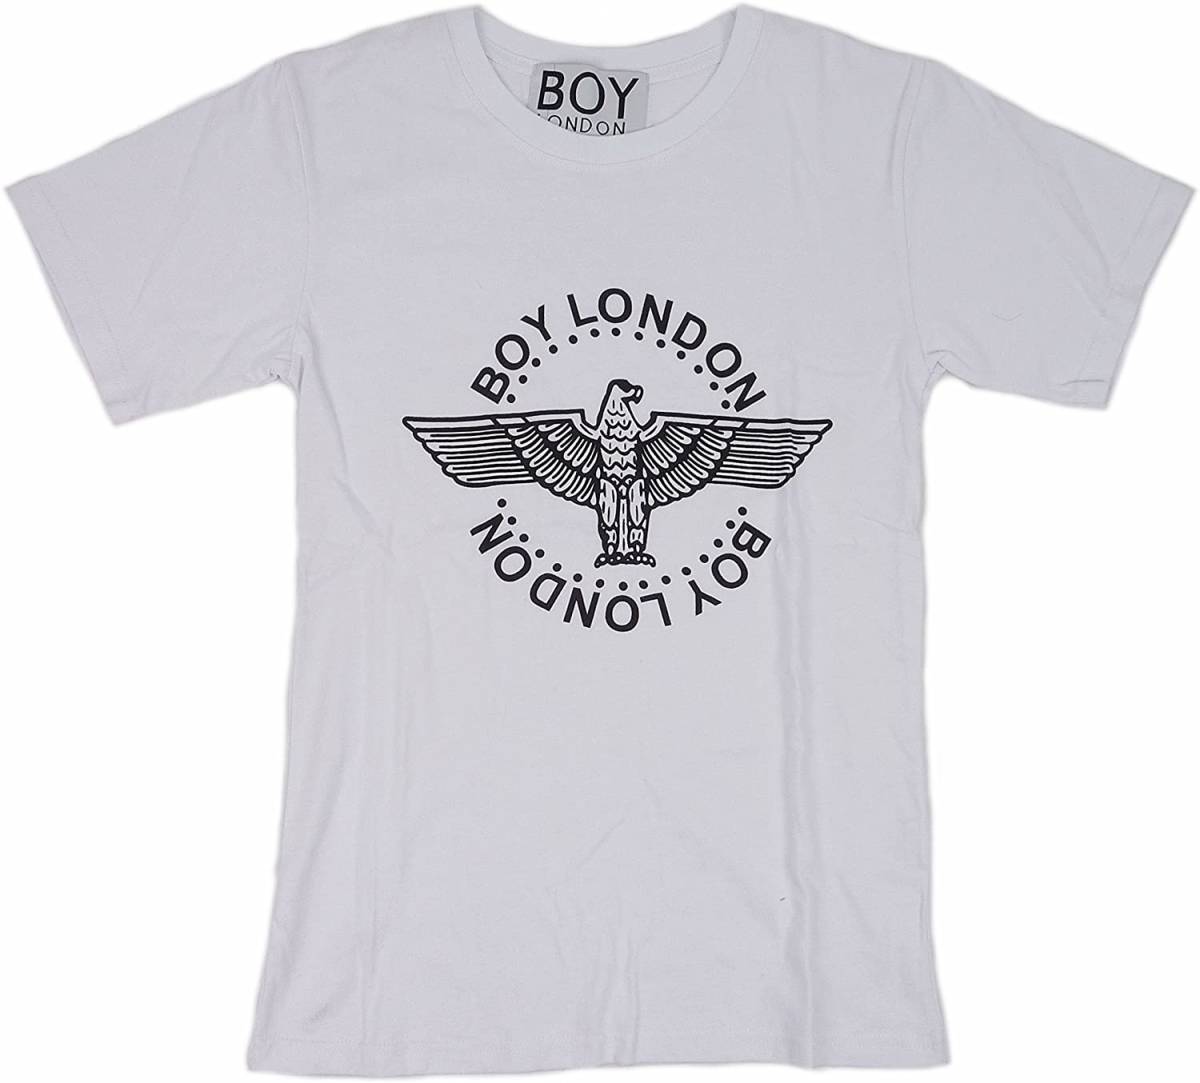 BOY LONDON ボーイロンドン ホークデザイン 半袖 93％以上節約 良質 並行輸入品 ホワイト Tシャツ M